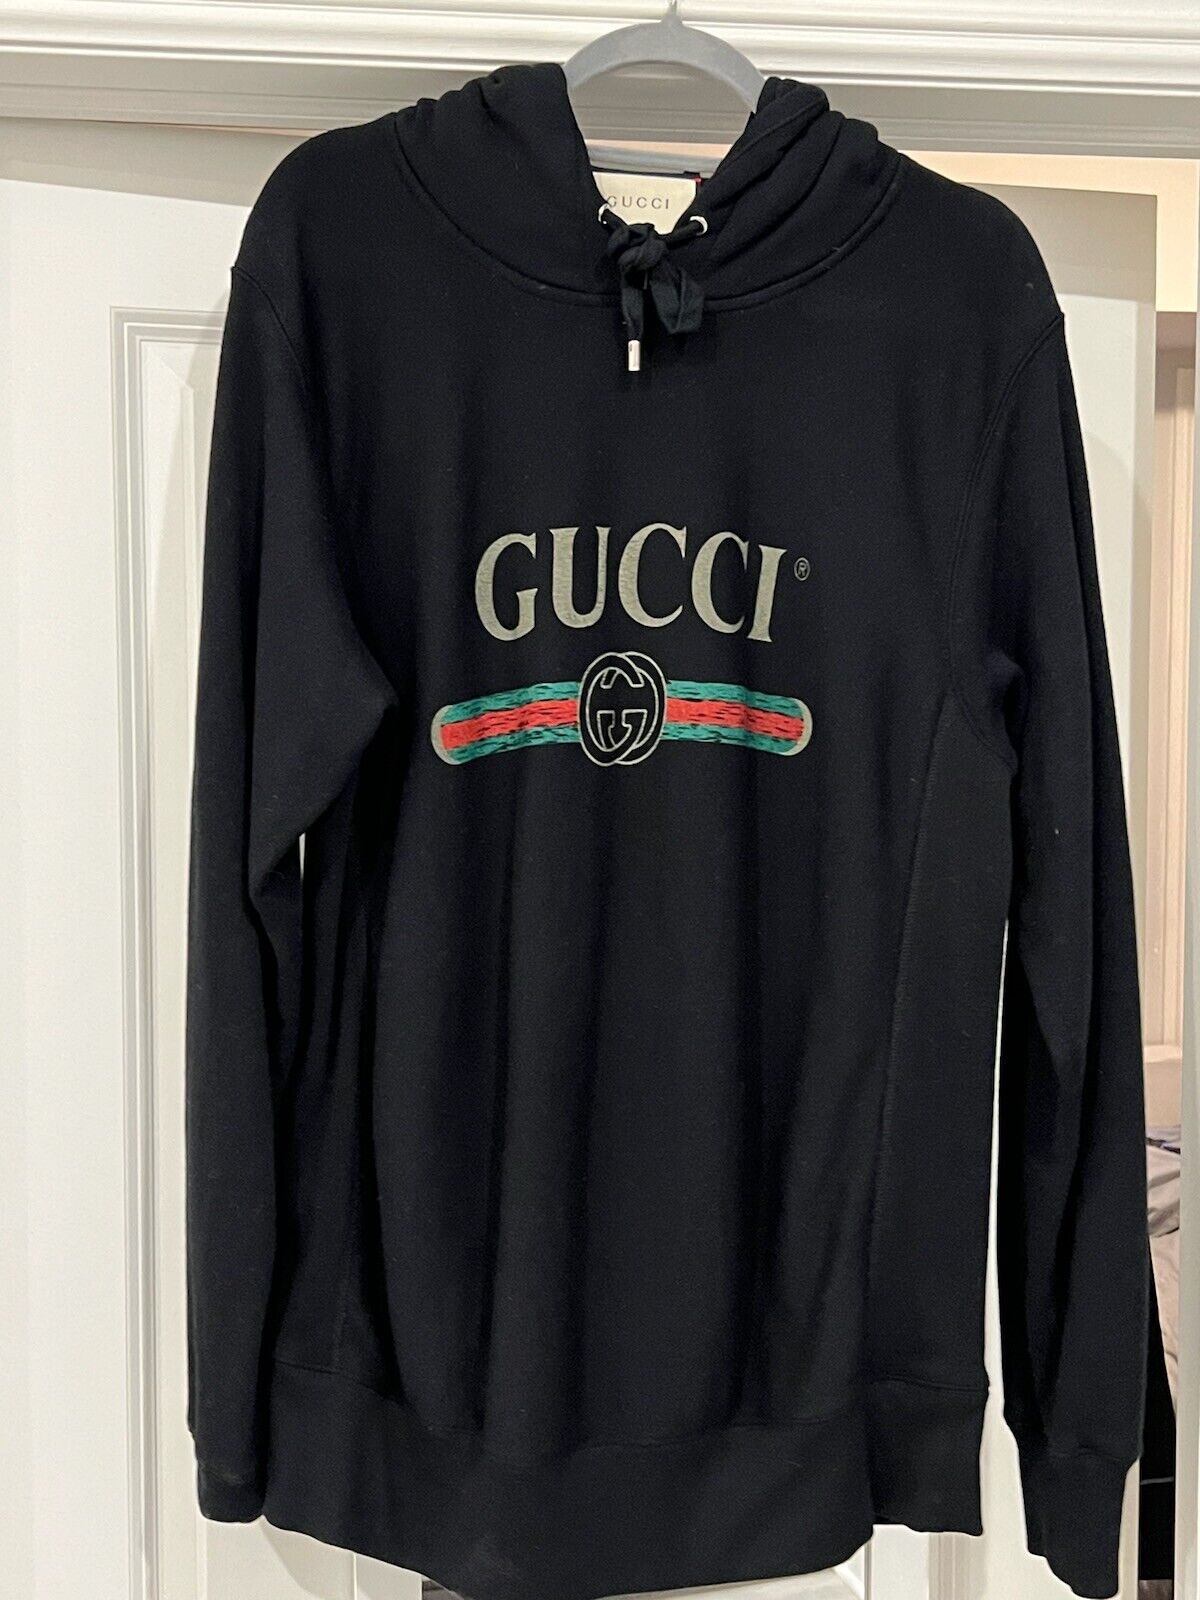 Gucci black hoodie | eBay